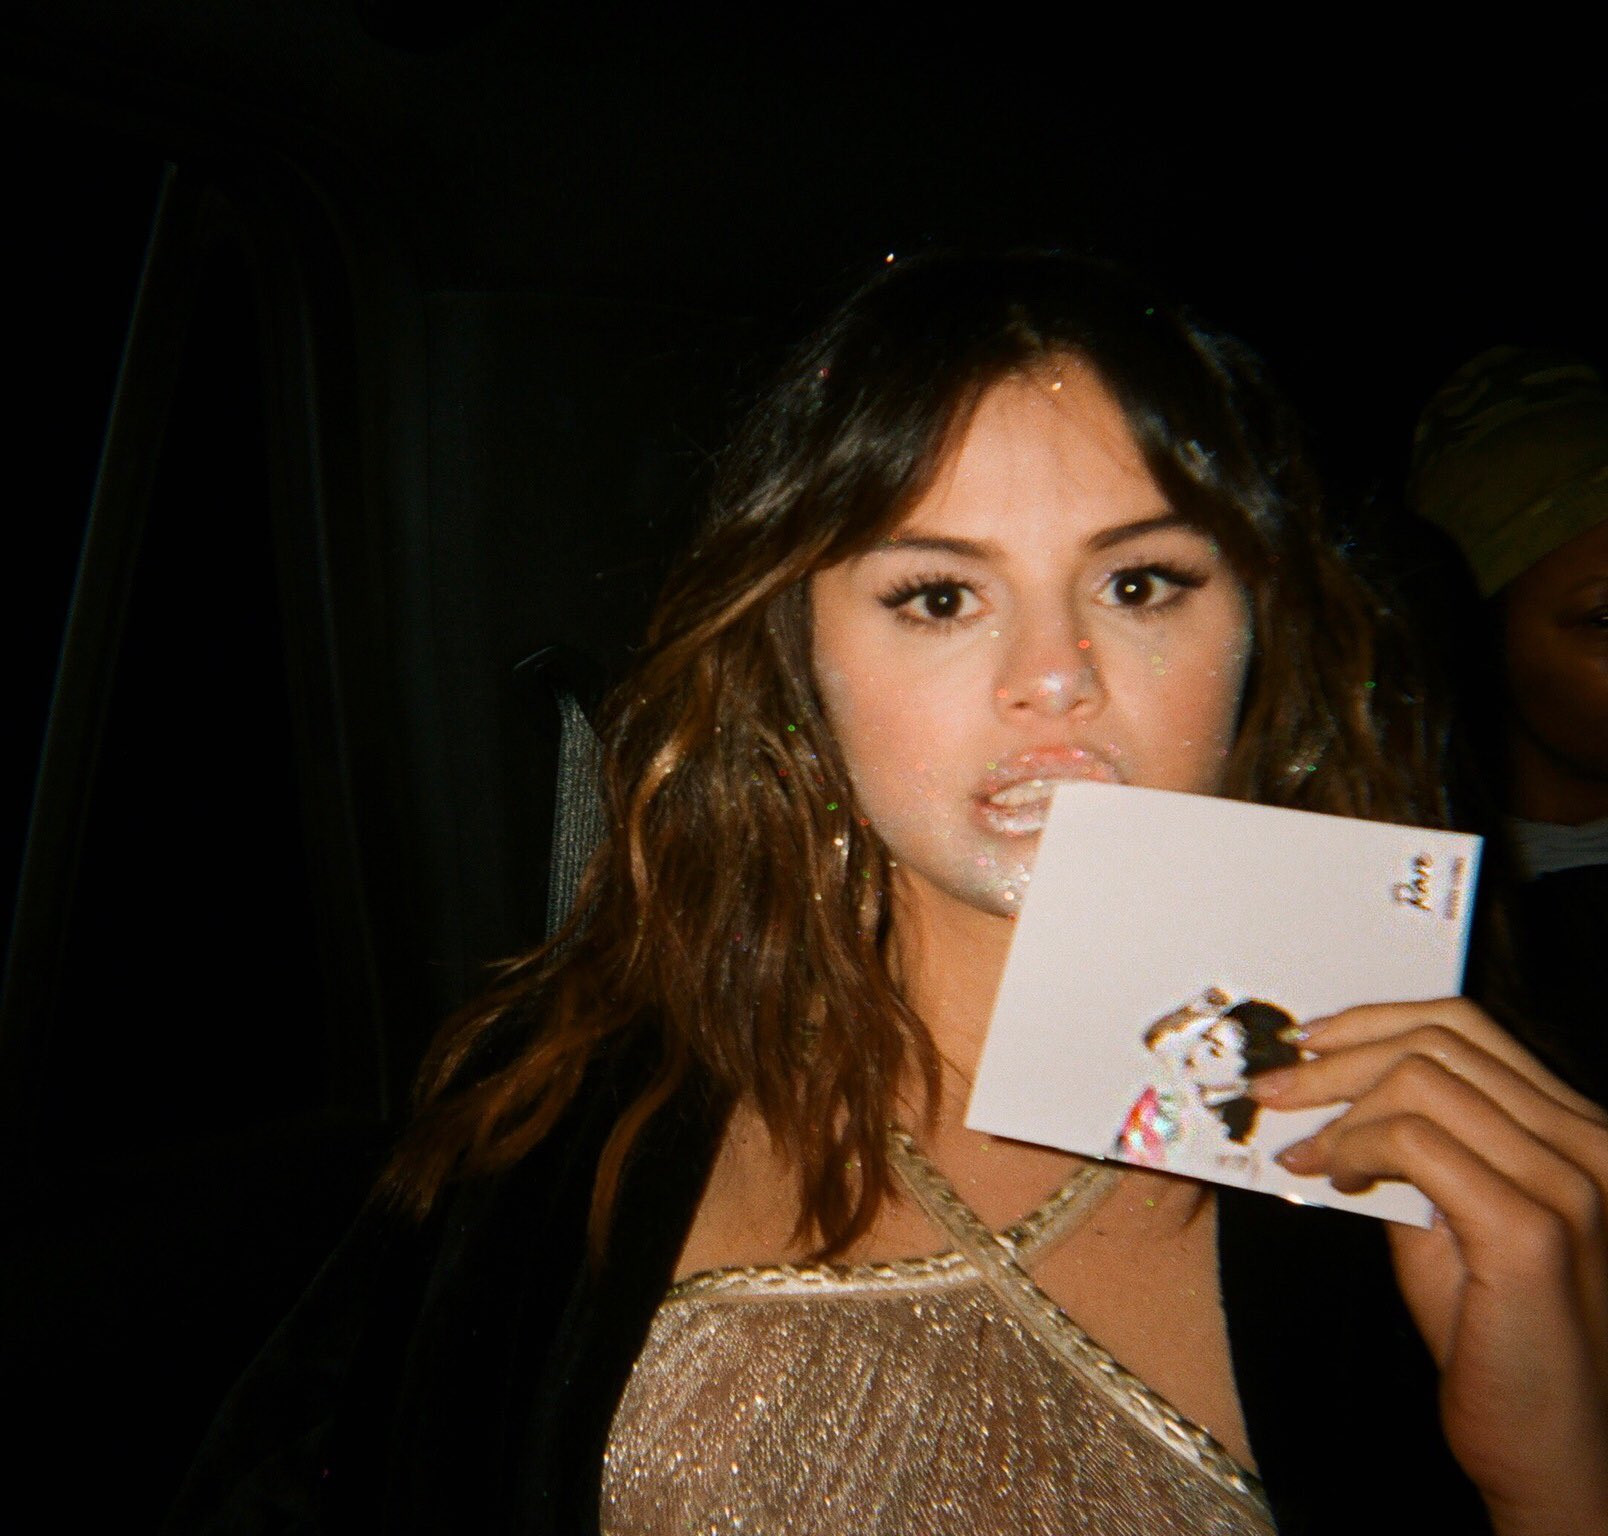 Selena Gomez’s Rare Could Be Her Best Album